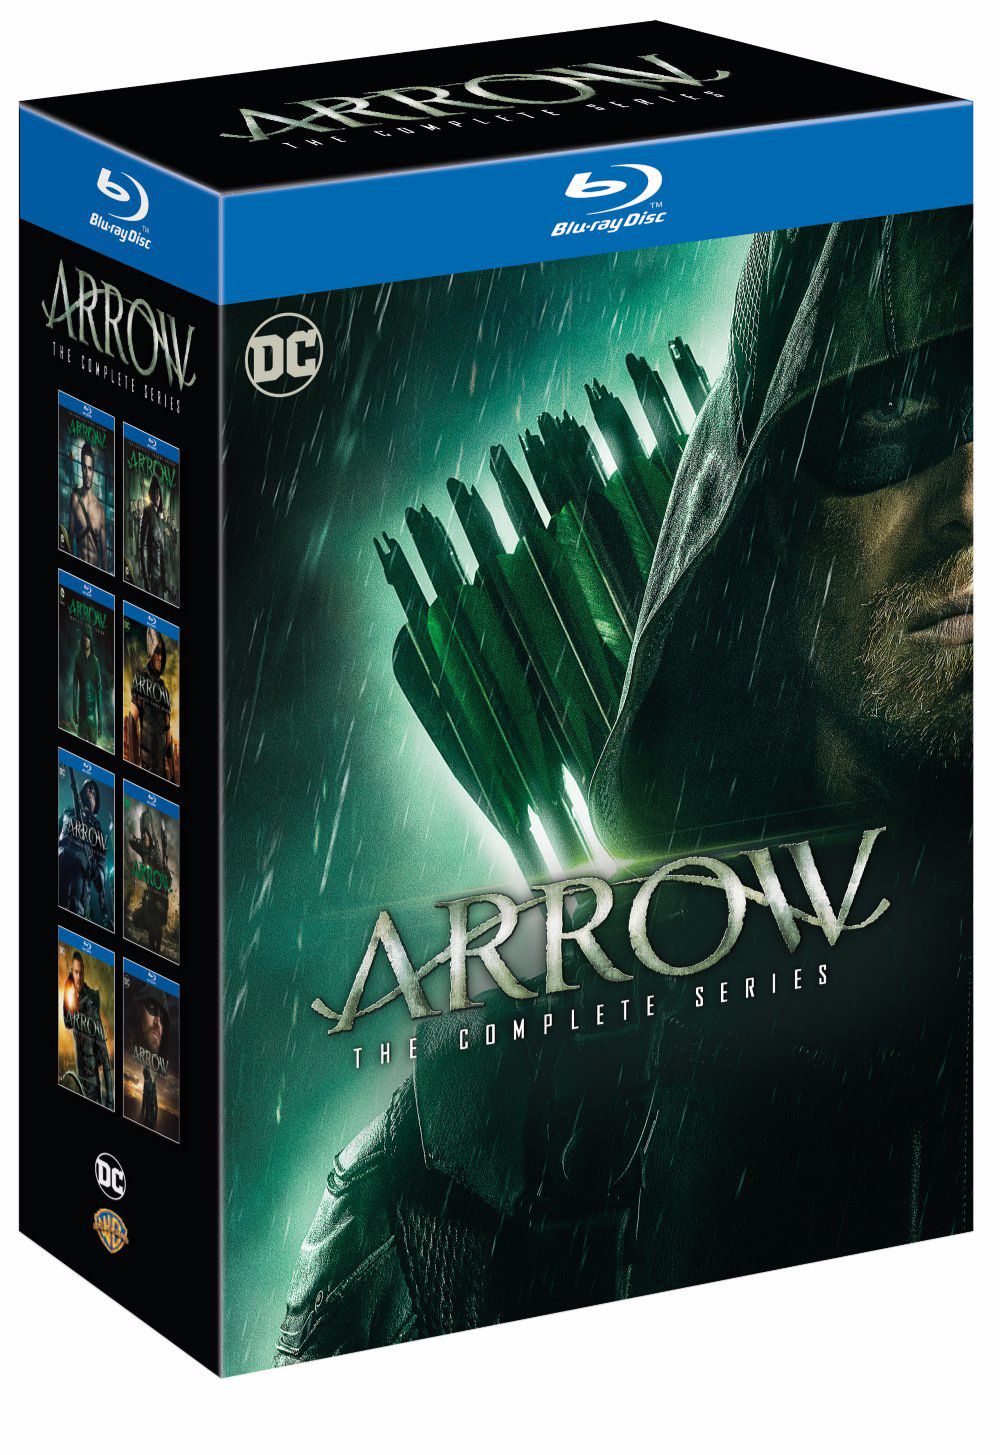 Arrow Complete Series Blu-ray #2